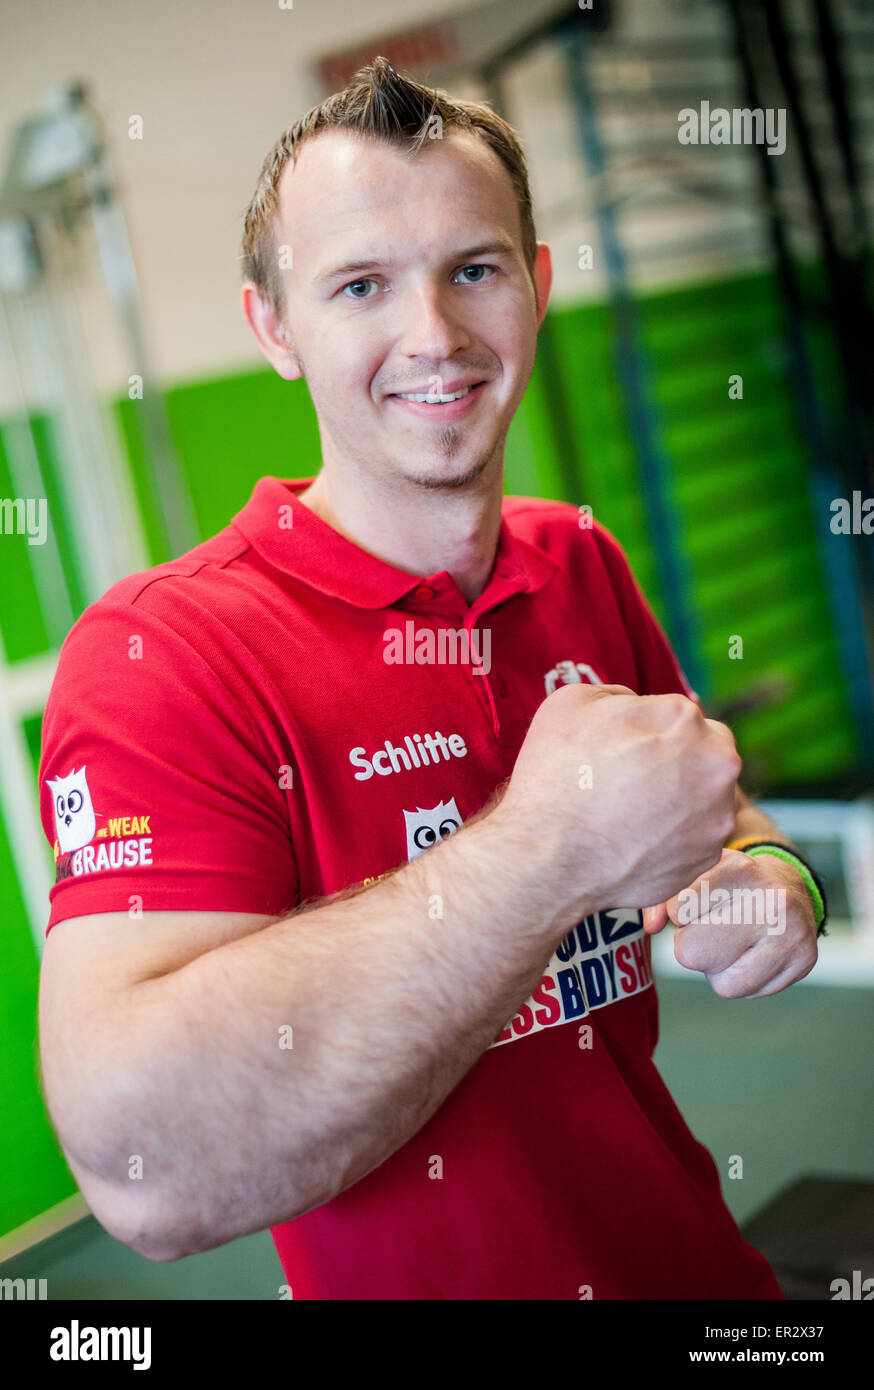 Wolfsburg, Germany. 20th May, 2015. Arm wrestler Matthias Schlitte Stock  Photo - Alamy